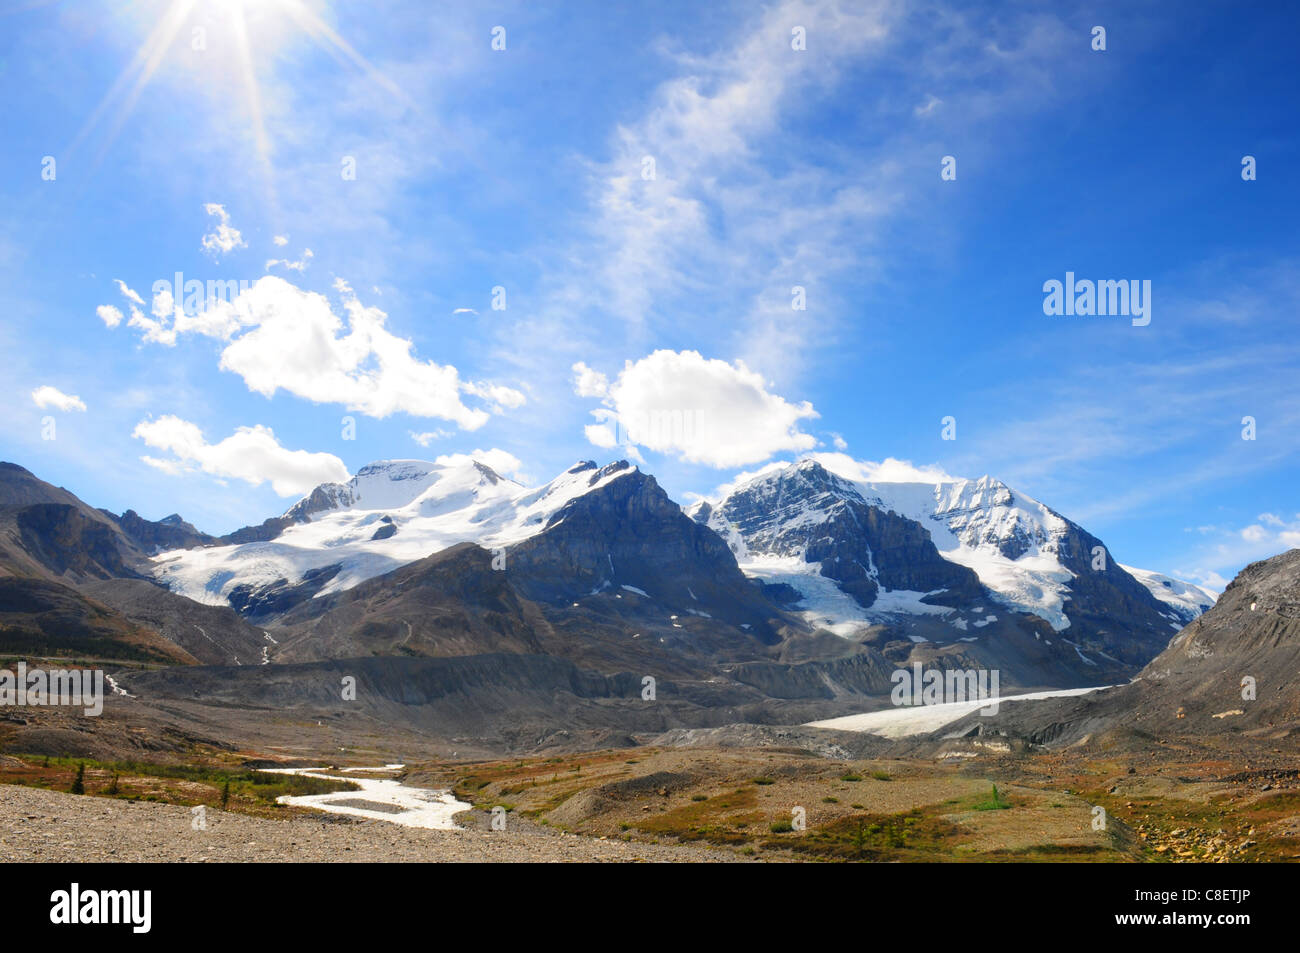 Ghiacciaio Athabasca Columbia Icefields, Canada Foto Stock